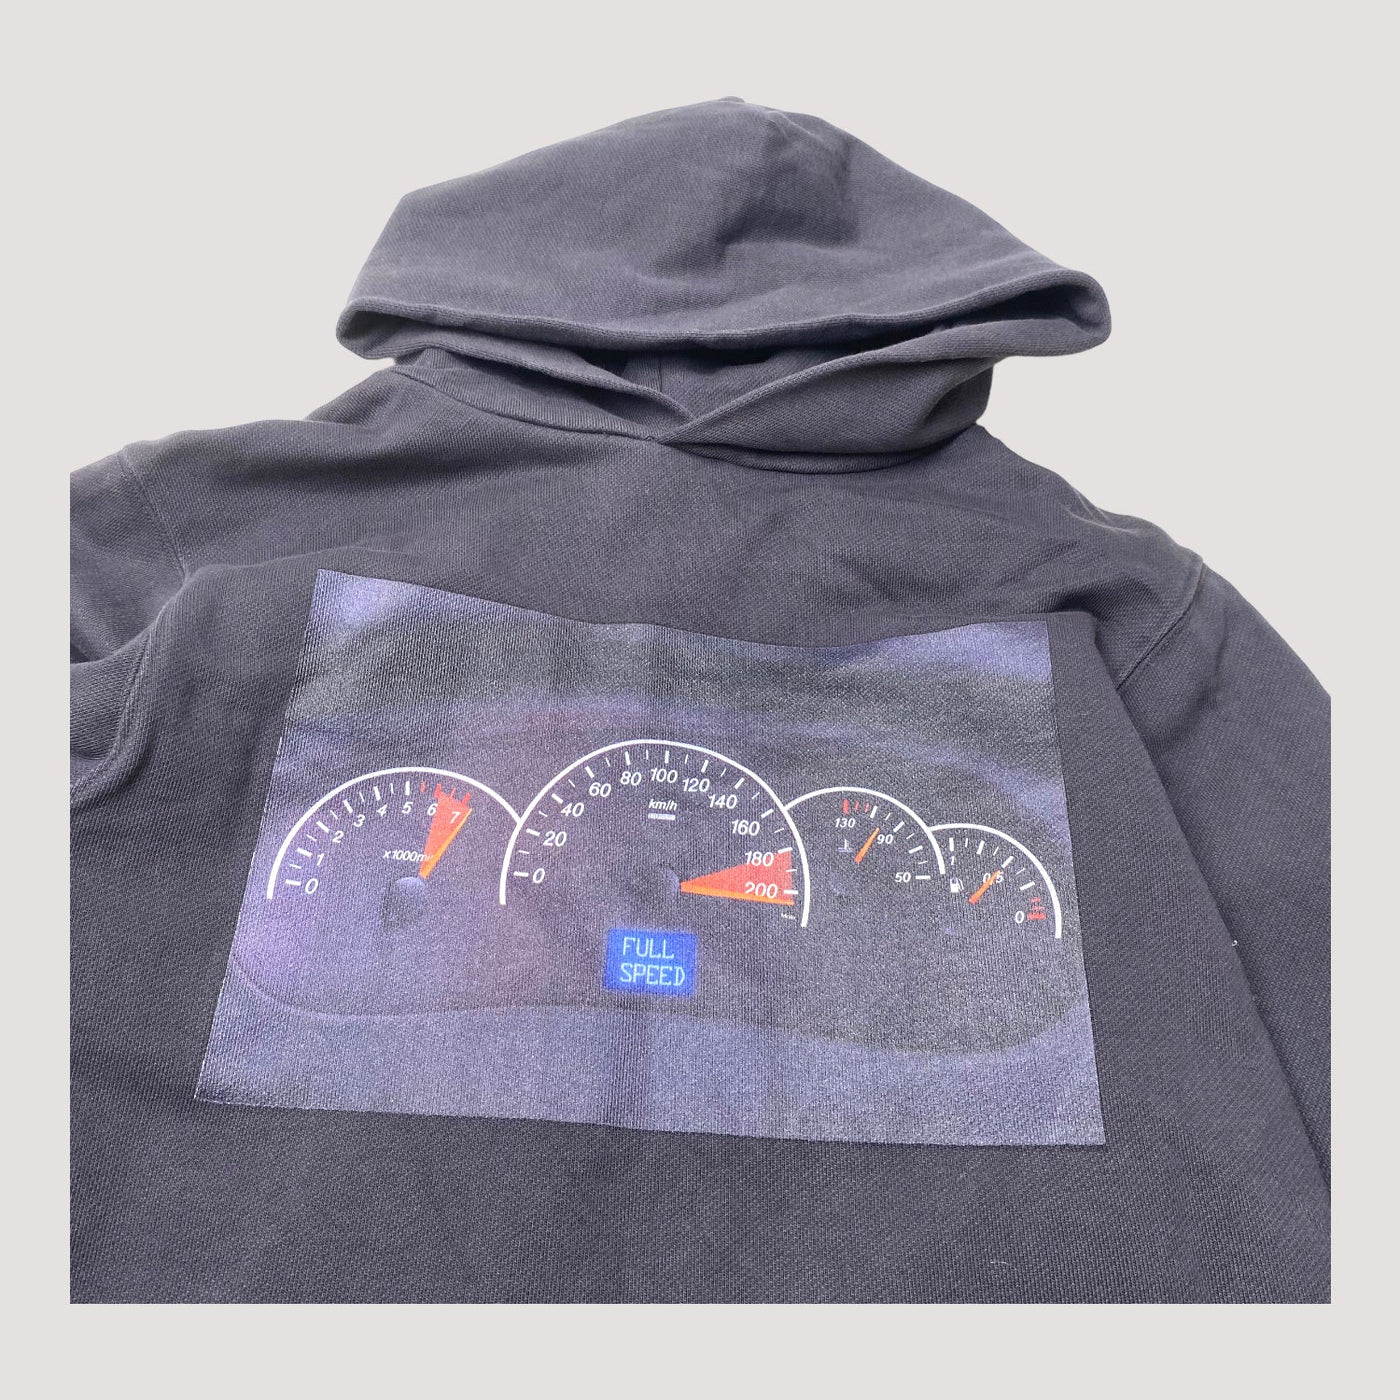 Molo hoodie, night grey | 152cm